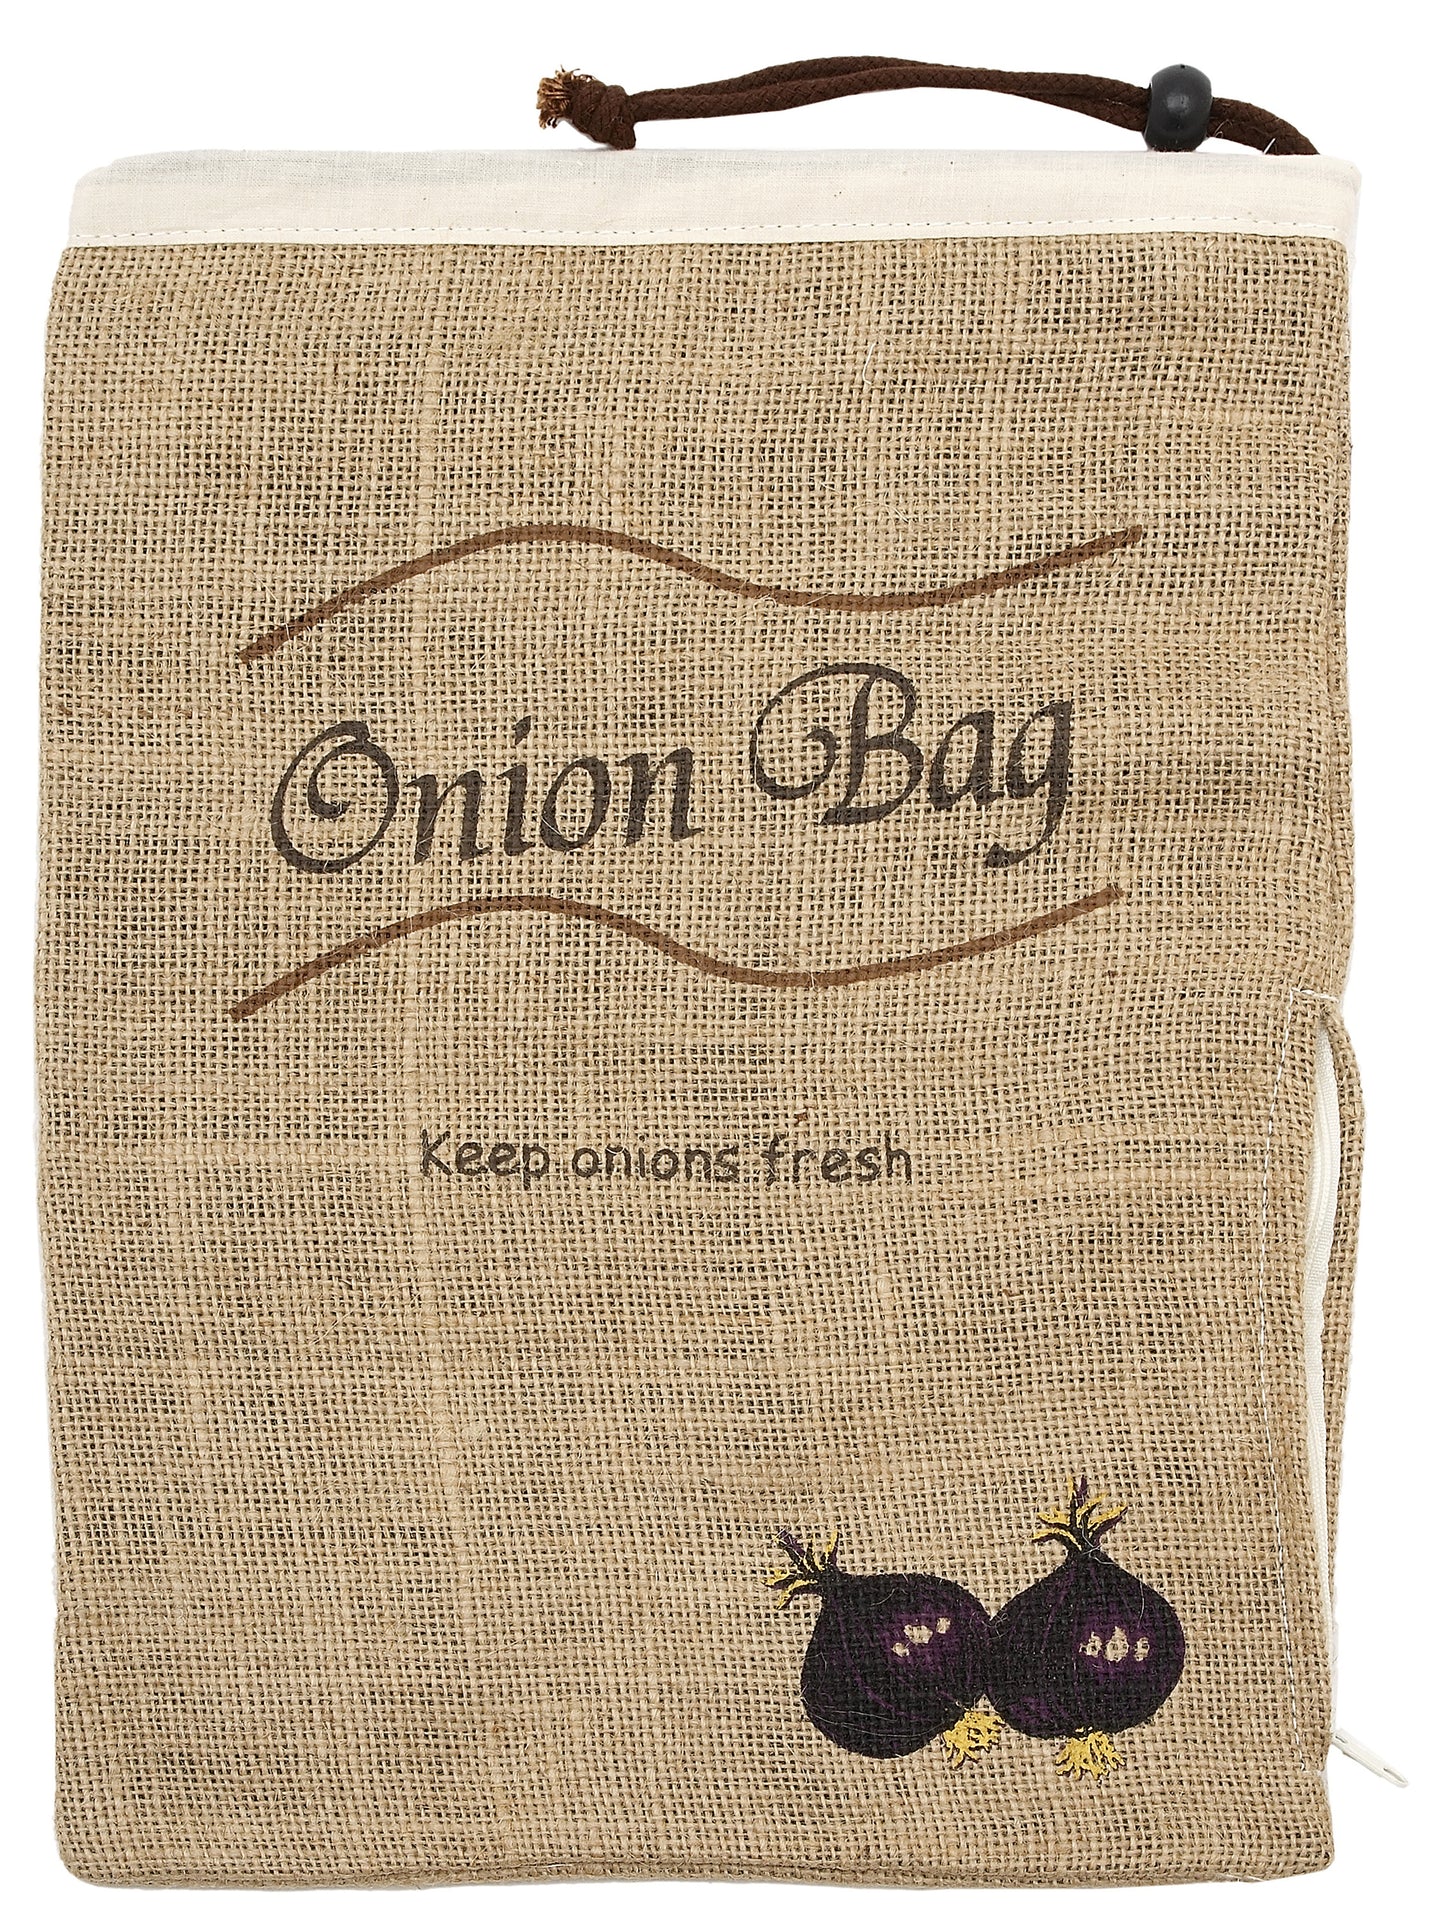 « Keep Fresh" Onion Bag